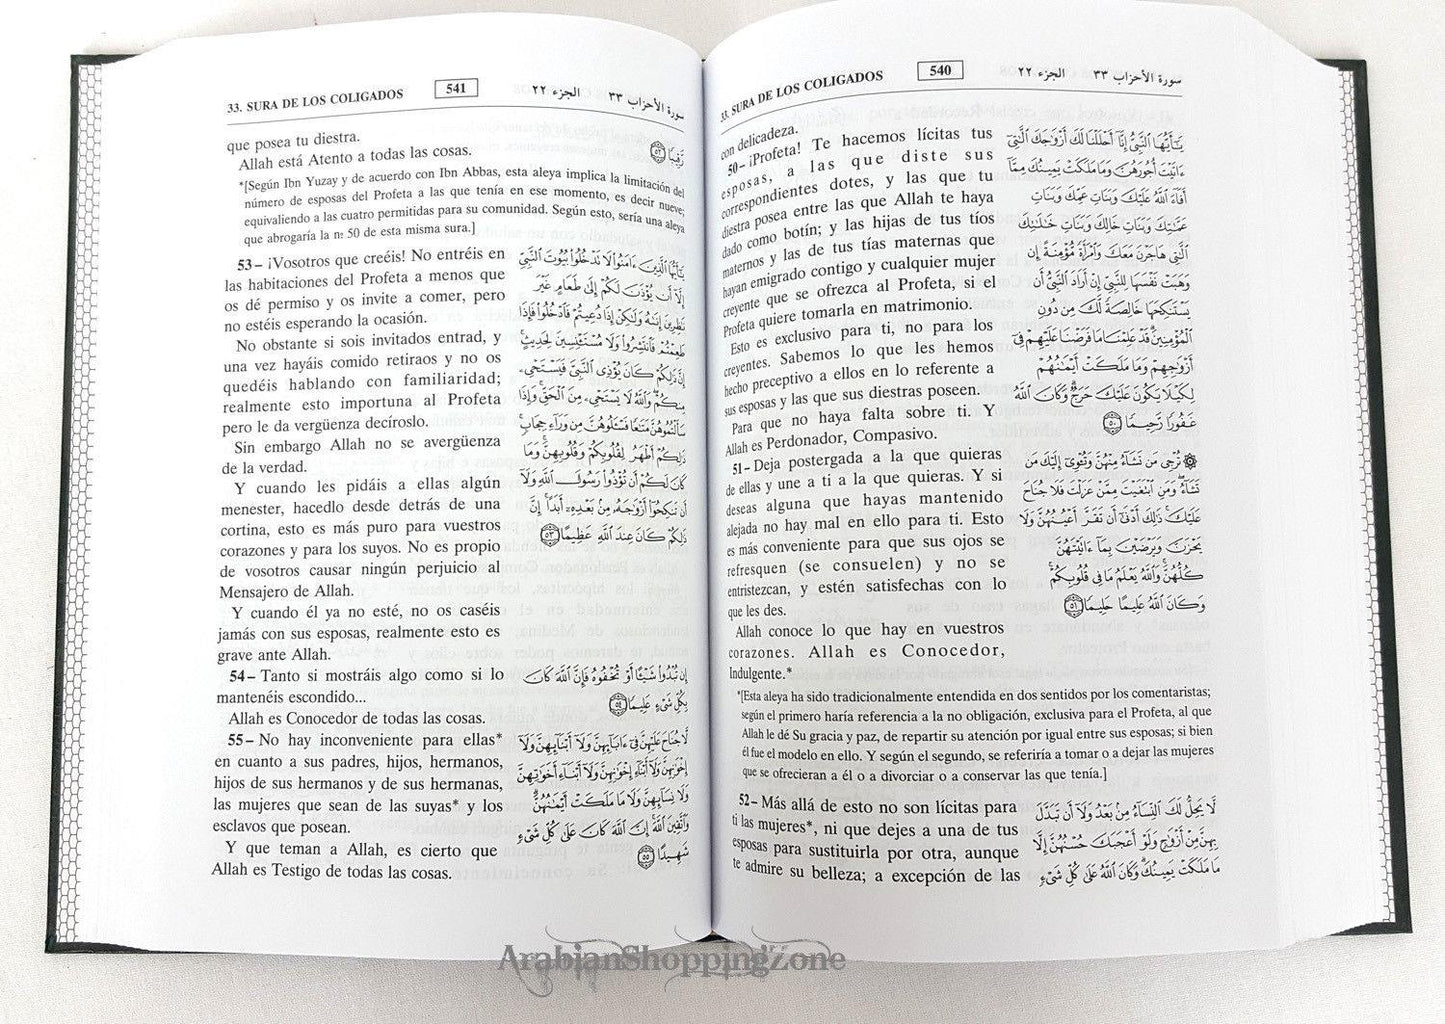 Noble Quran Arabic / Spanish (Espanol) Translation - Arabian Shopping Zone